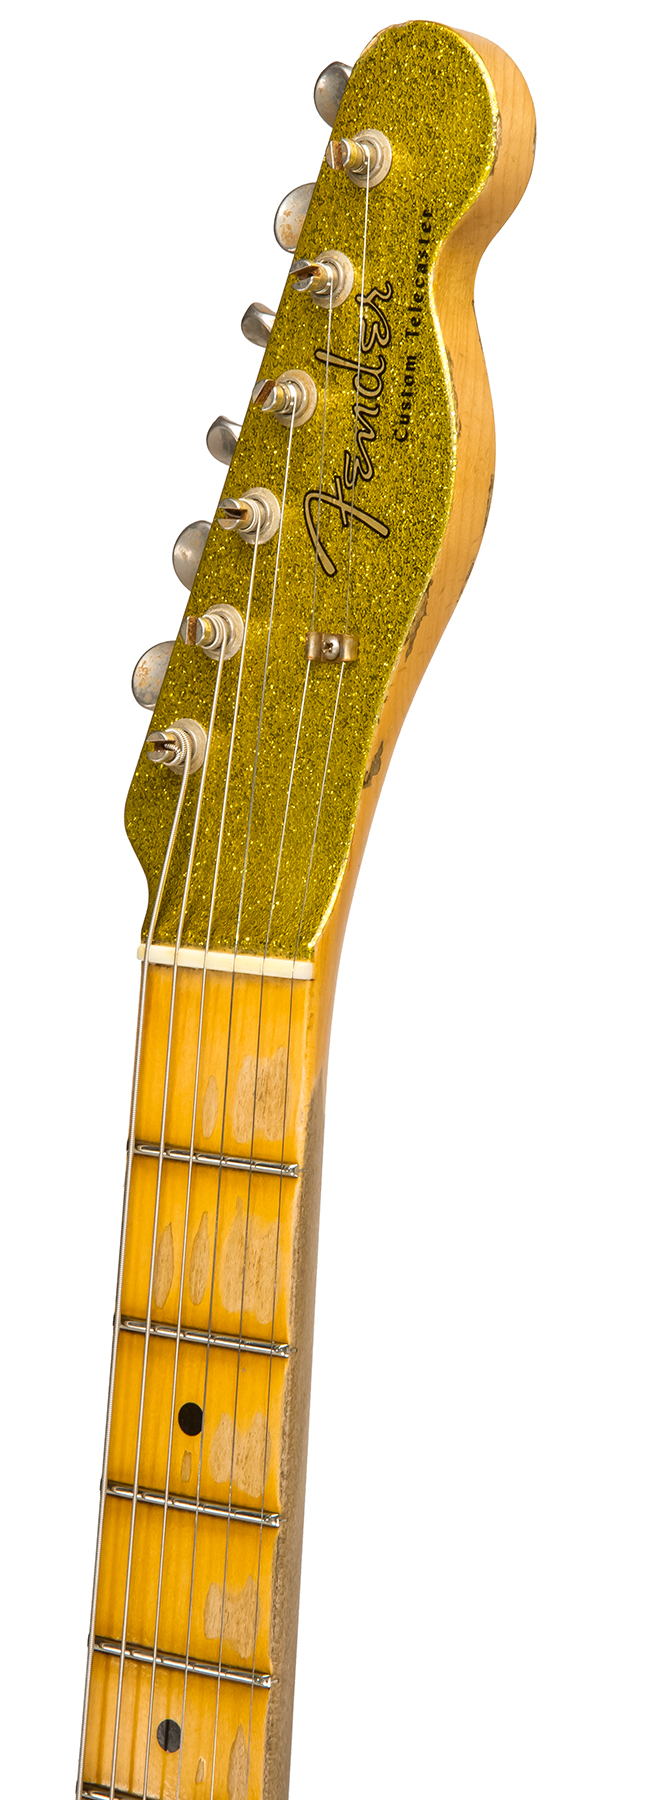 Fender Custom Shop Tele Custom 1963 2020 Ltd Rw #cz545983 - Relic Chartreuse Sparkle - Guitarra eléctrica con forma de tel - Variation 4